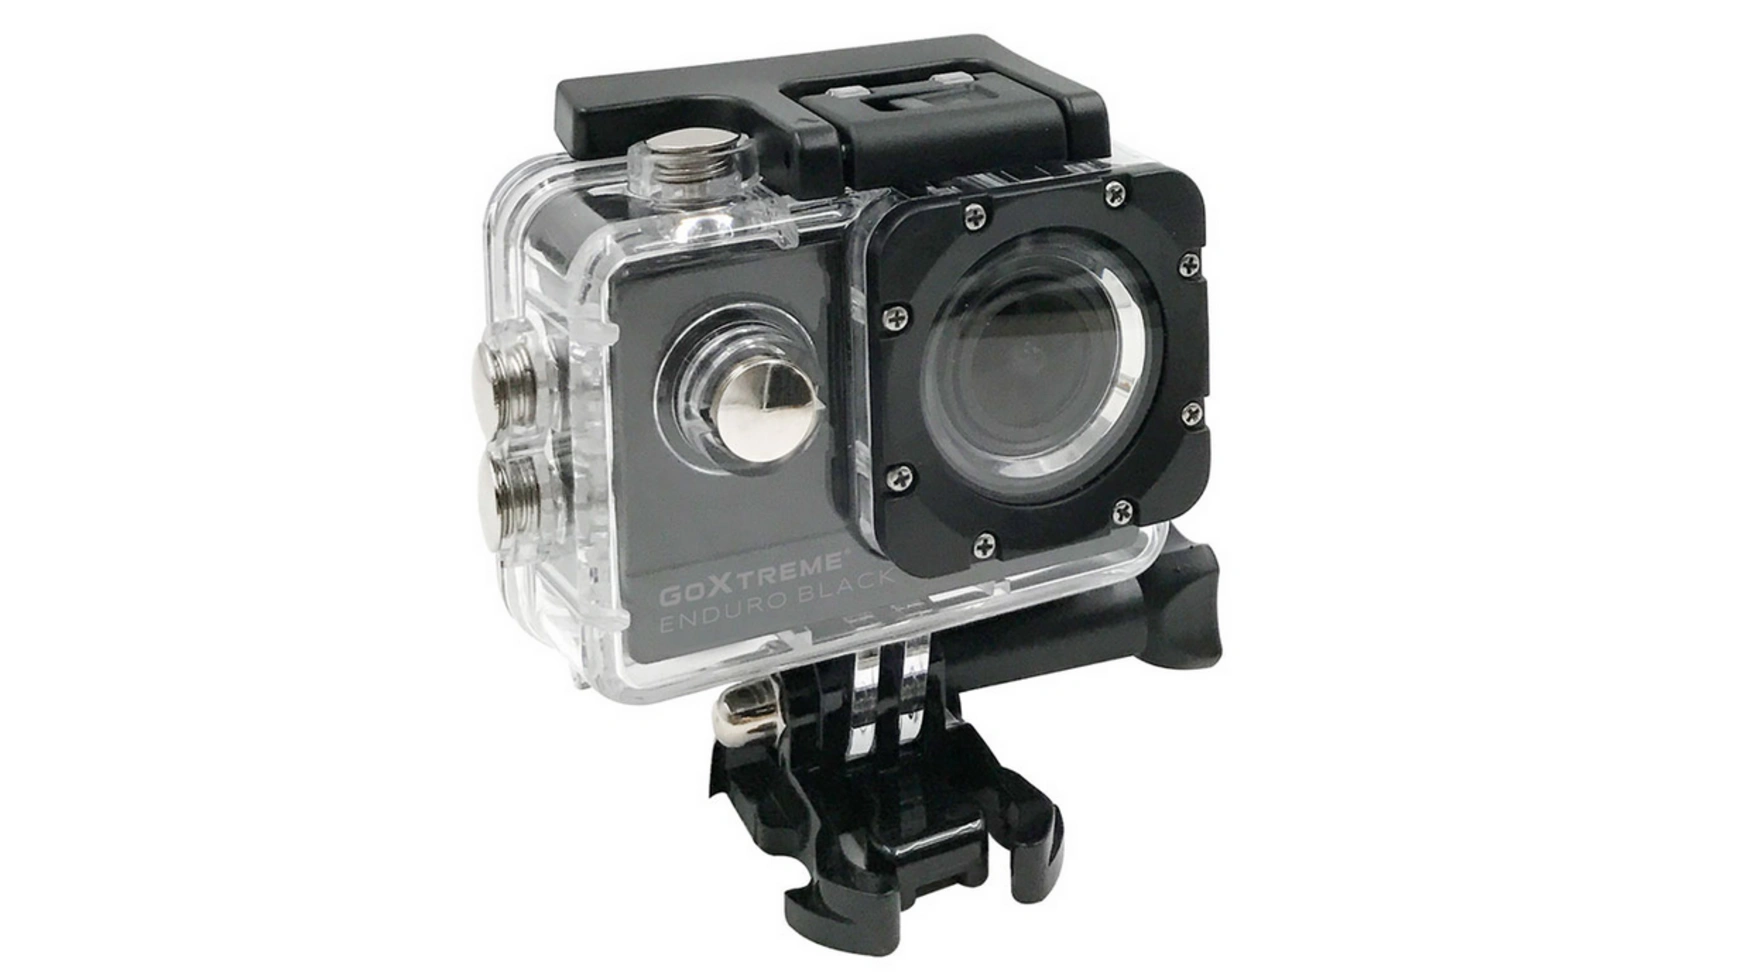 Goxtreme эндуро-черная экшн-камера 4k No Brand goxtreme экшн камера rebel full hd no brand